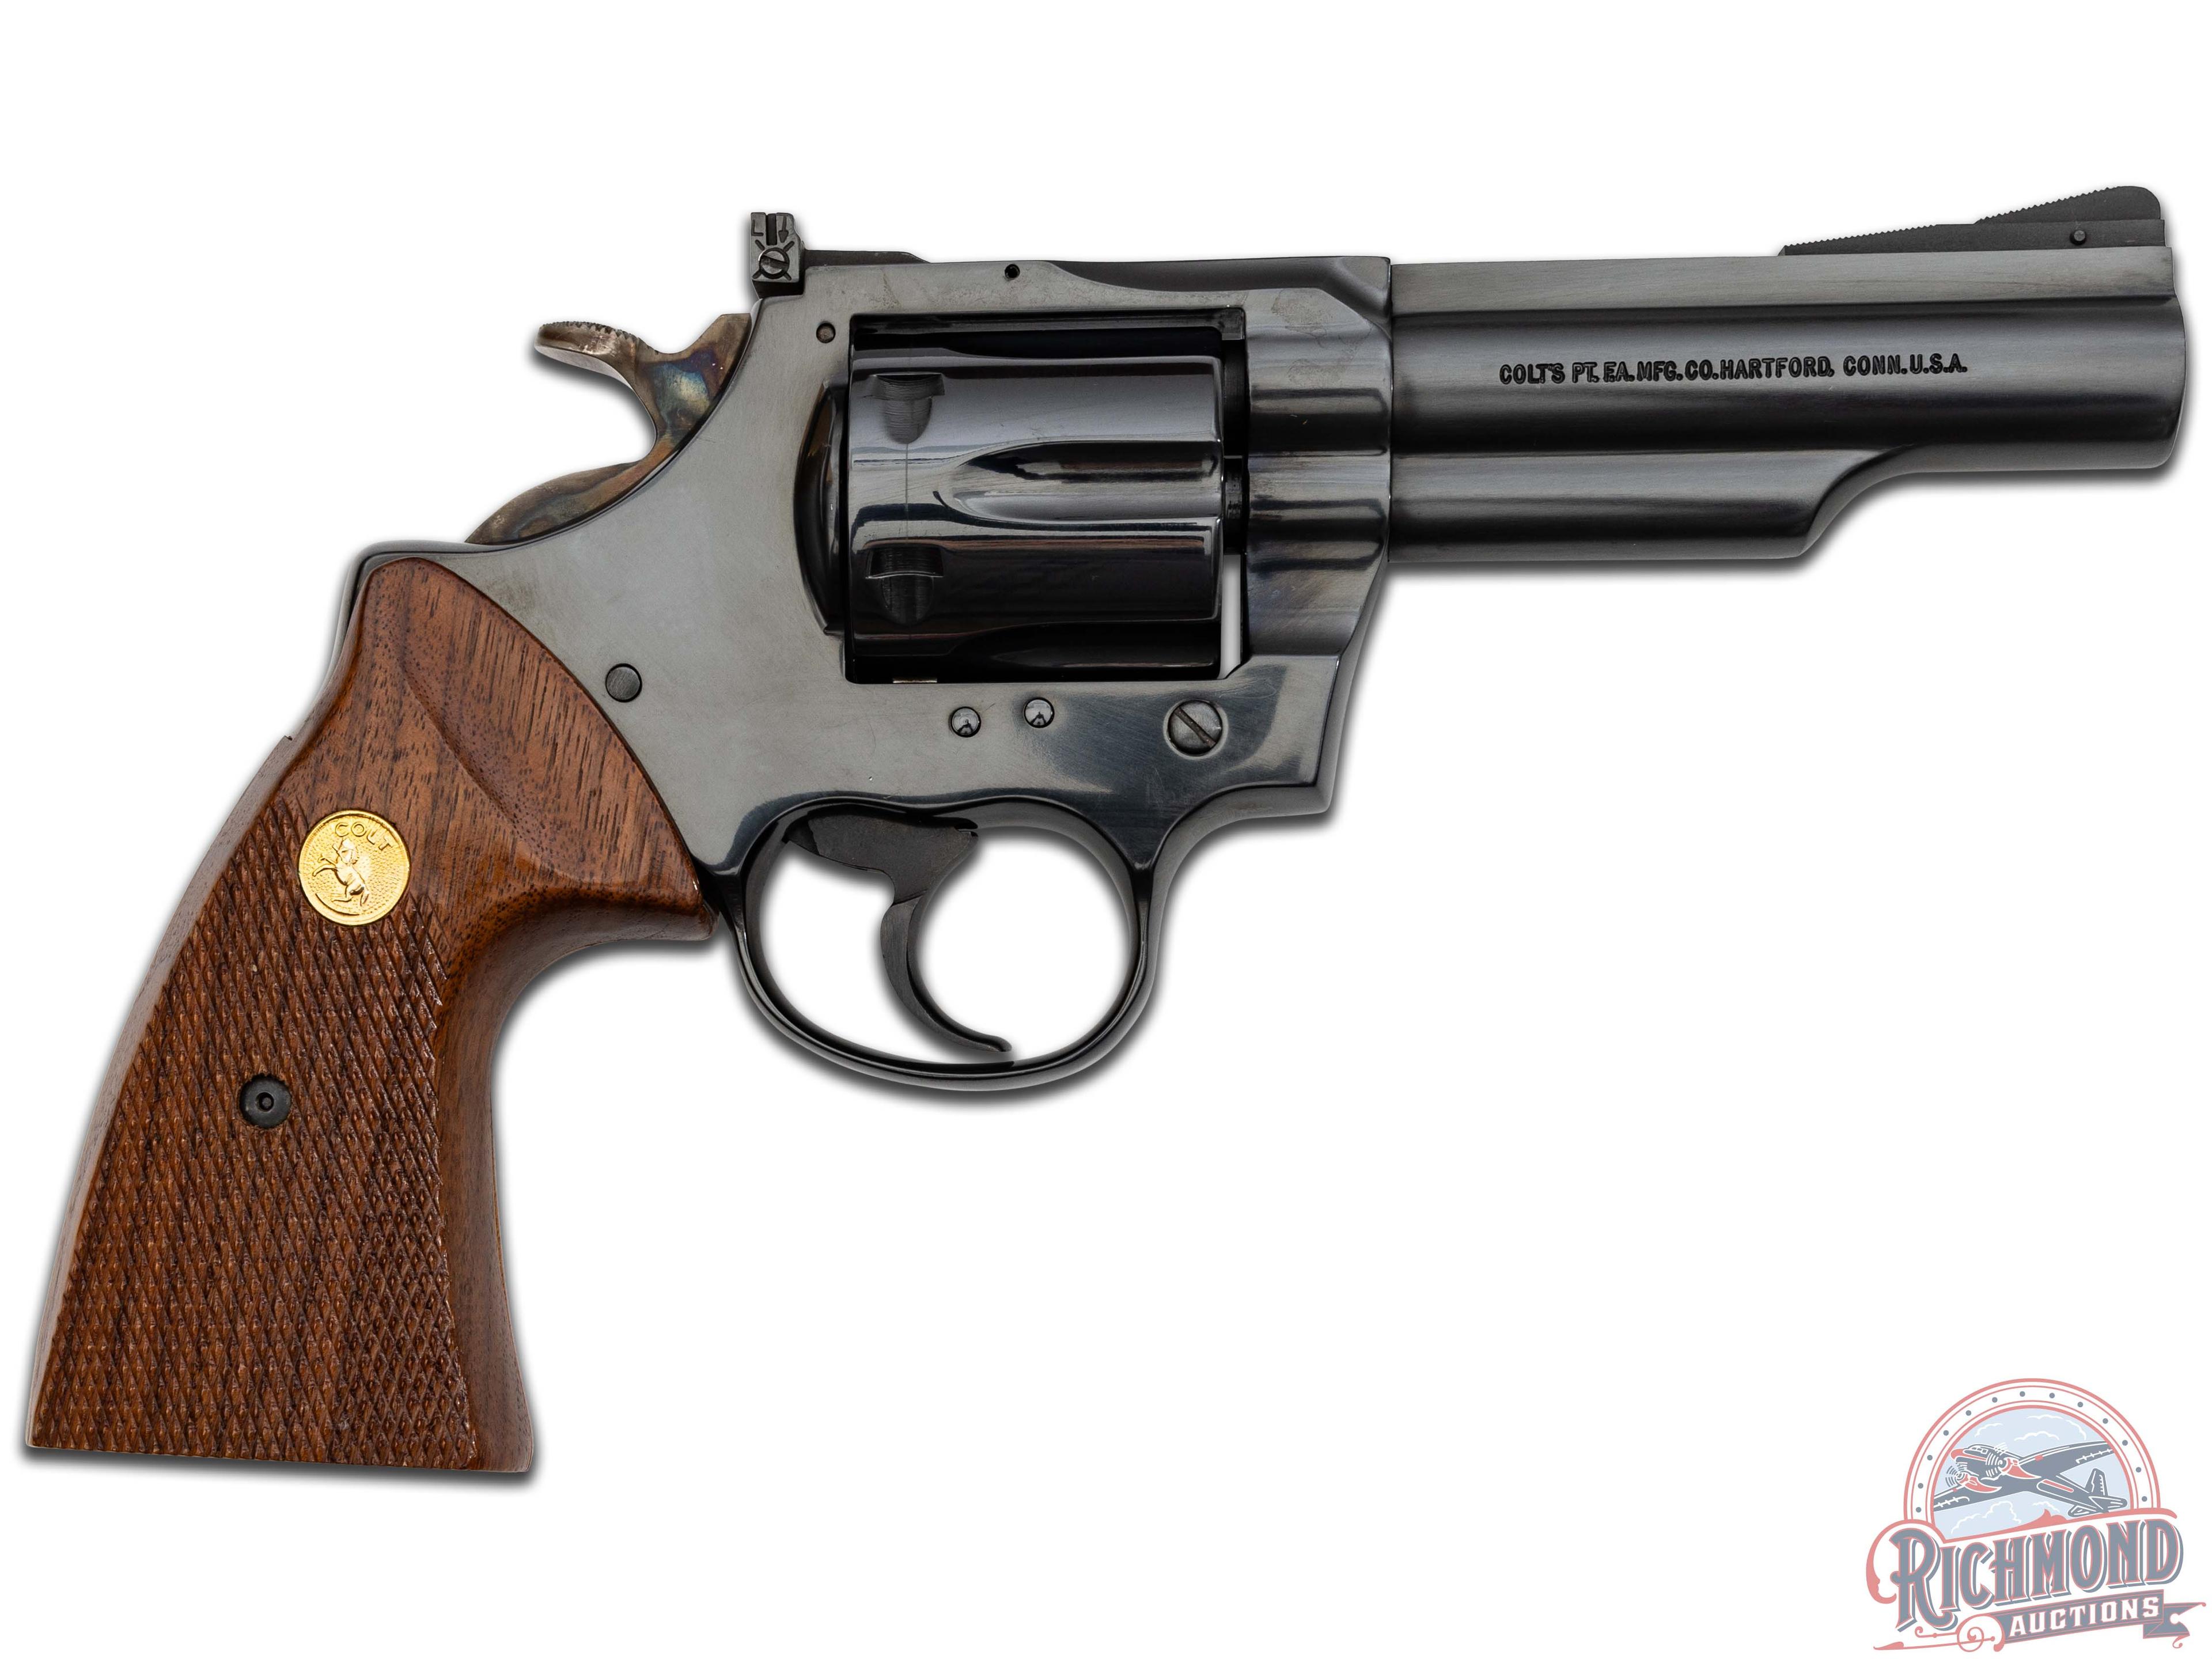 1979 Colt Trooper MK III .22 LR 4" Blued Double Action Revolver in Original Box